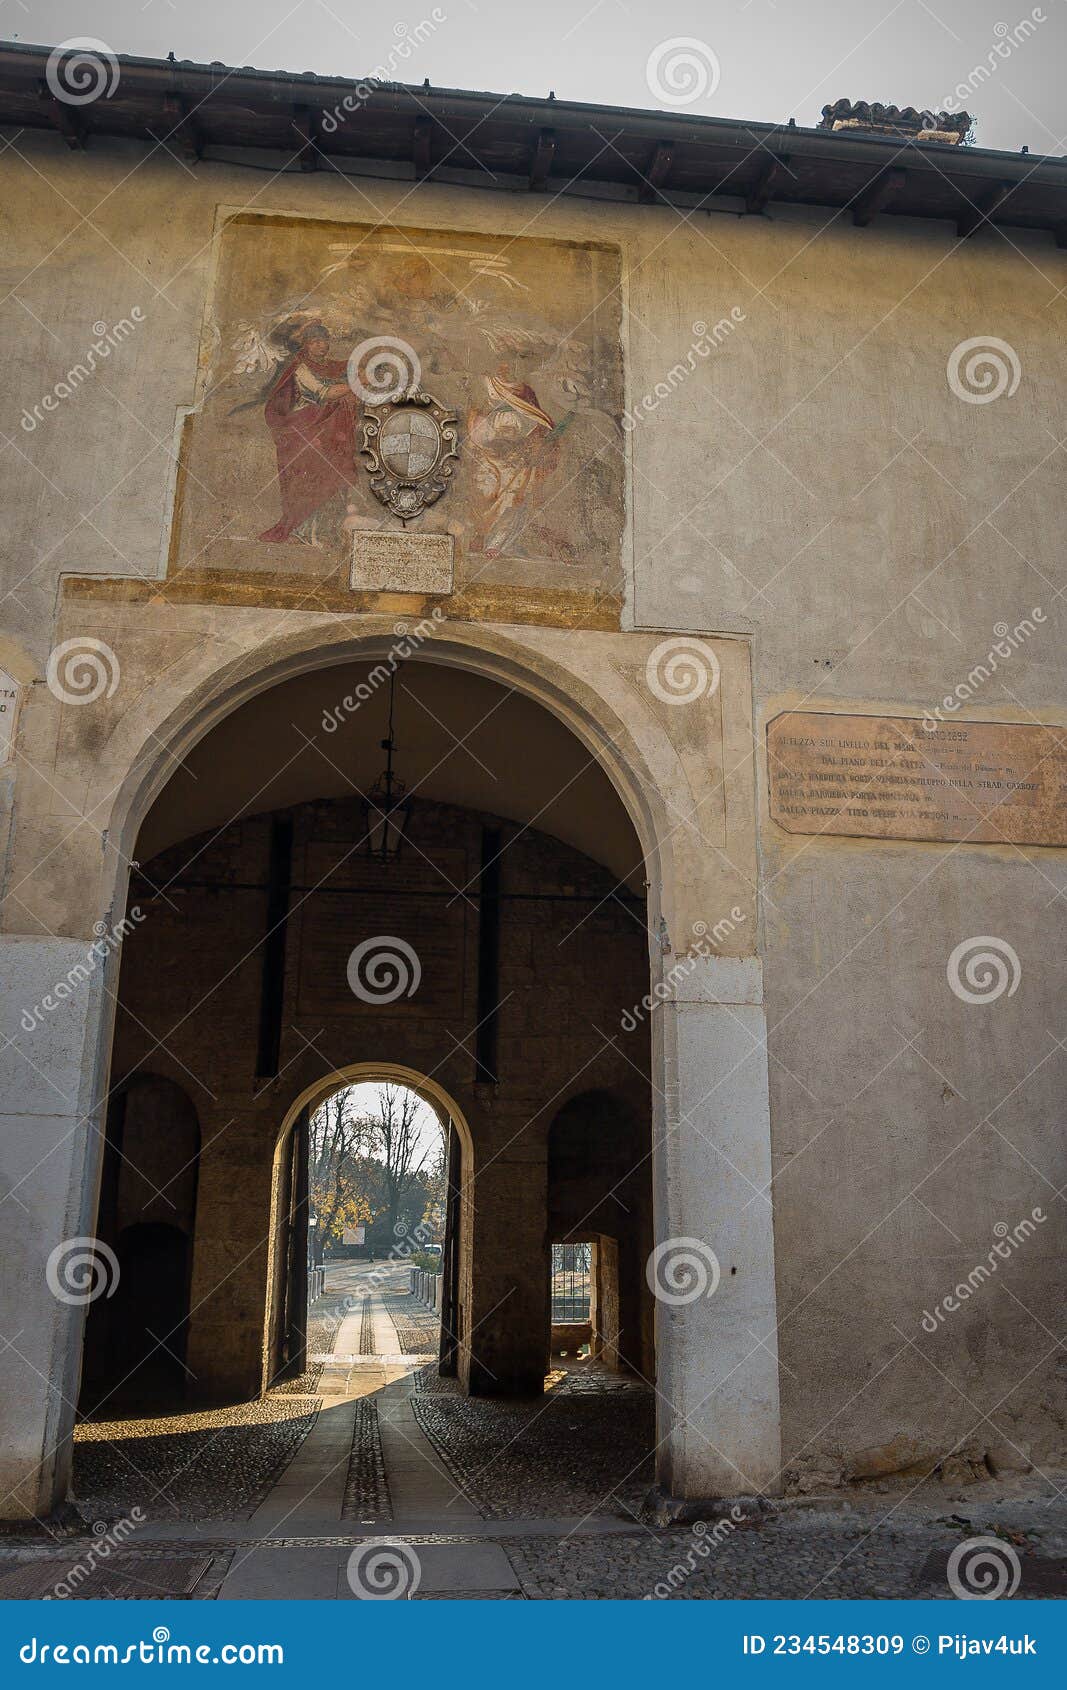 gate of medieval castle of brescia on colle cidneo